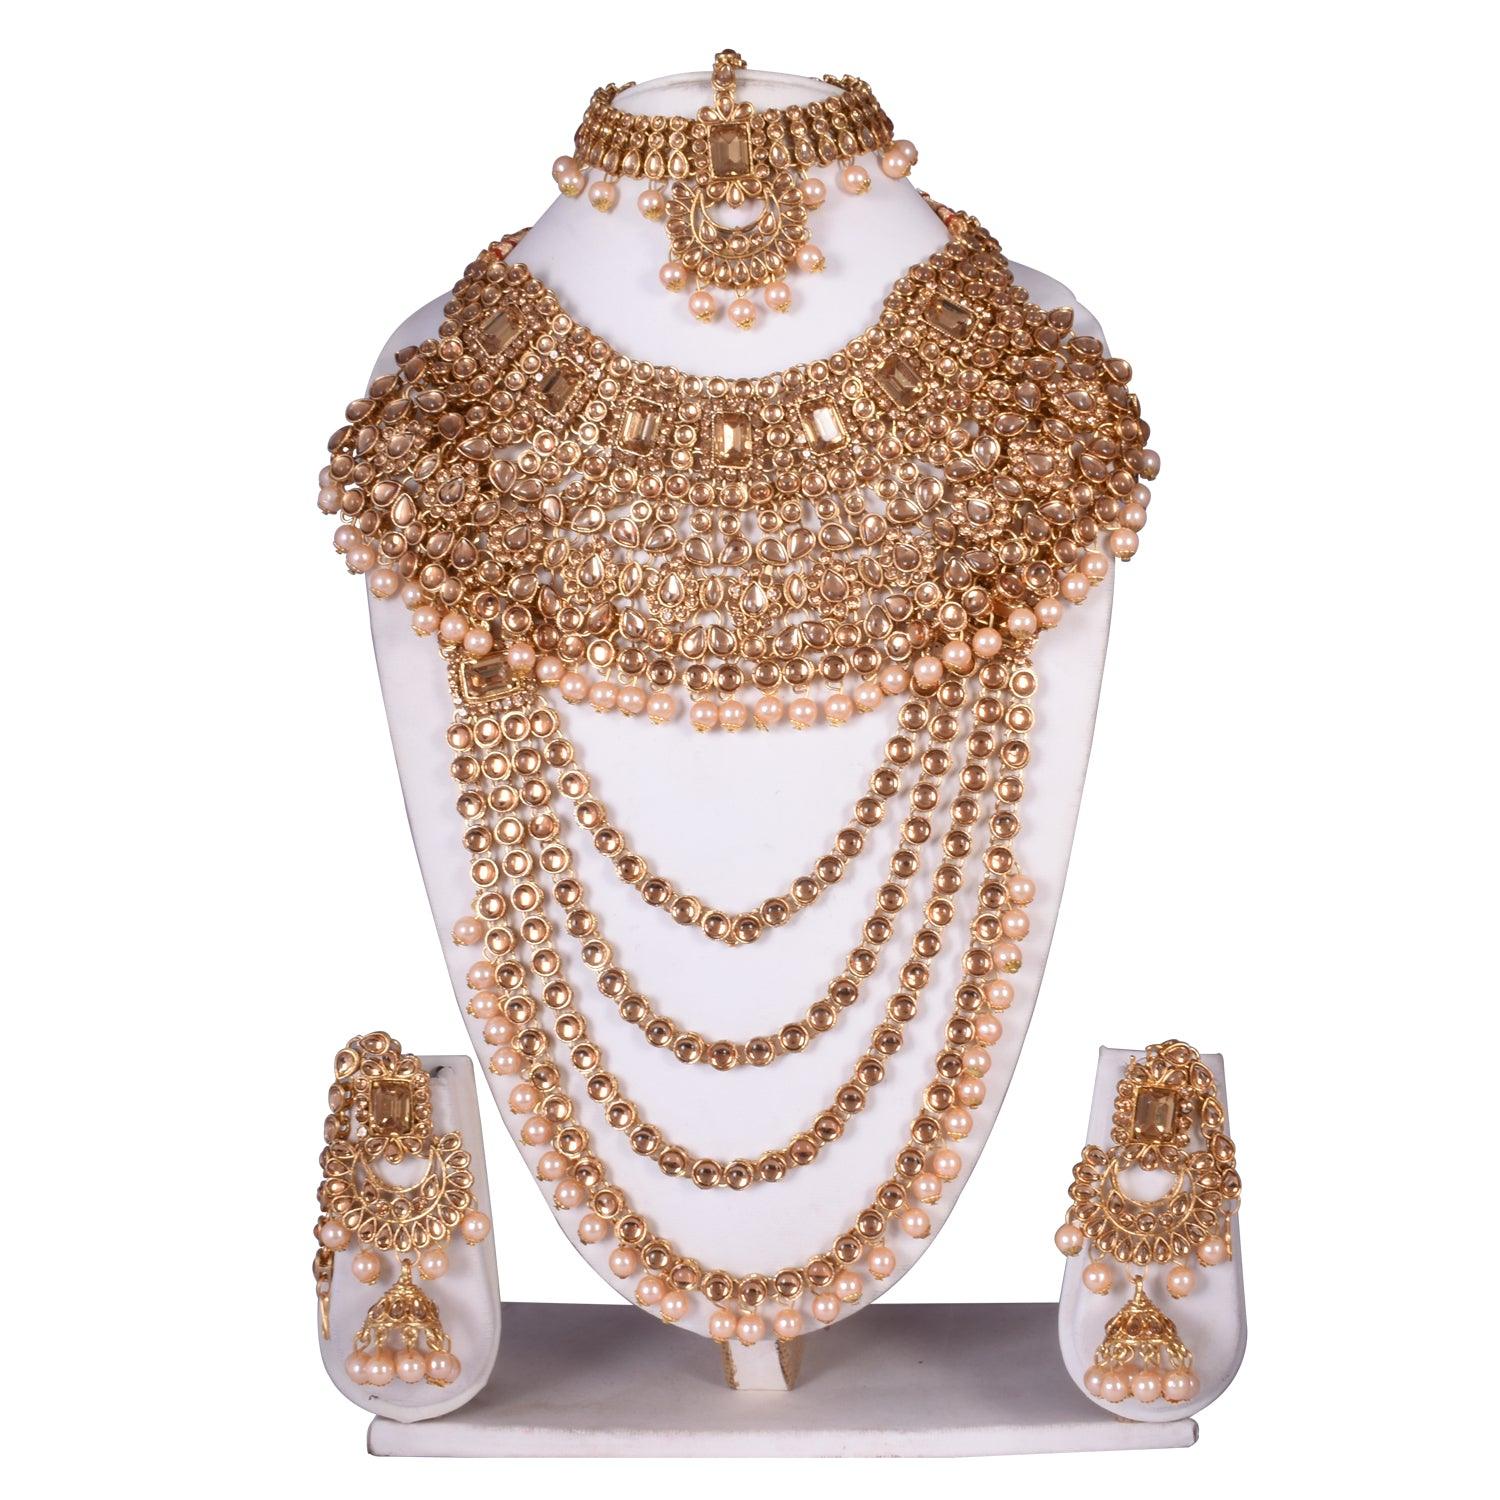 Buy Gold Jewelry Set CZ Wedding Necklace Set Bridal Jewelry Online in India   Etsy